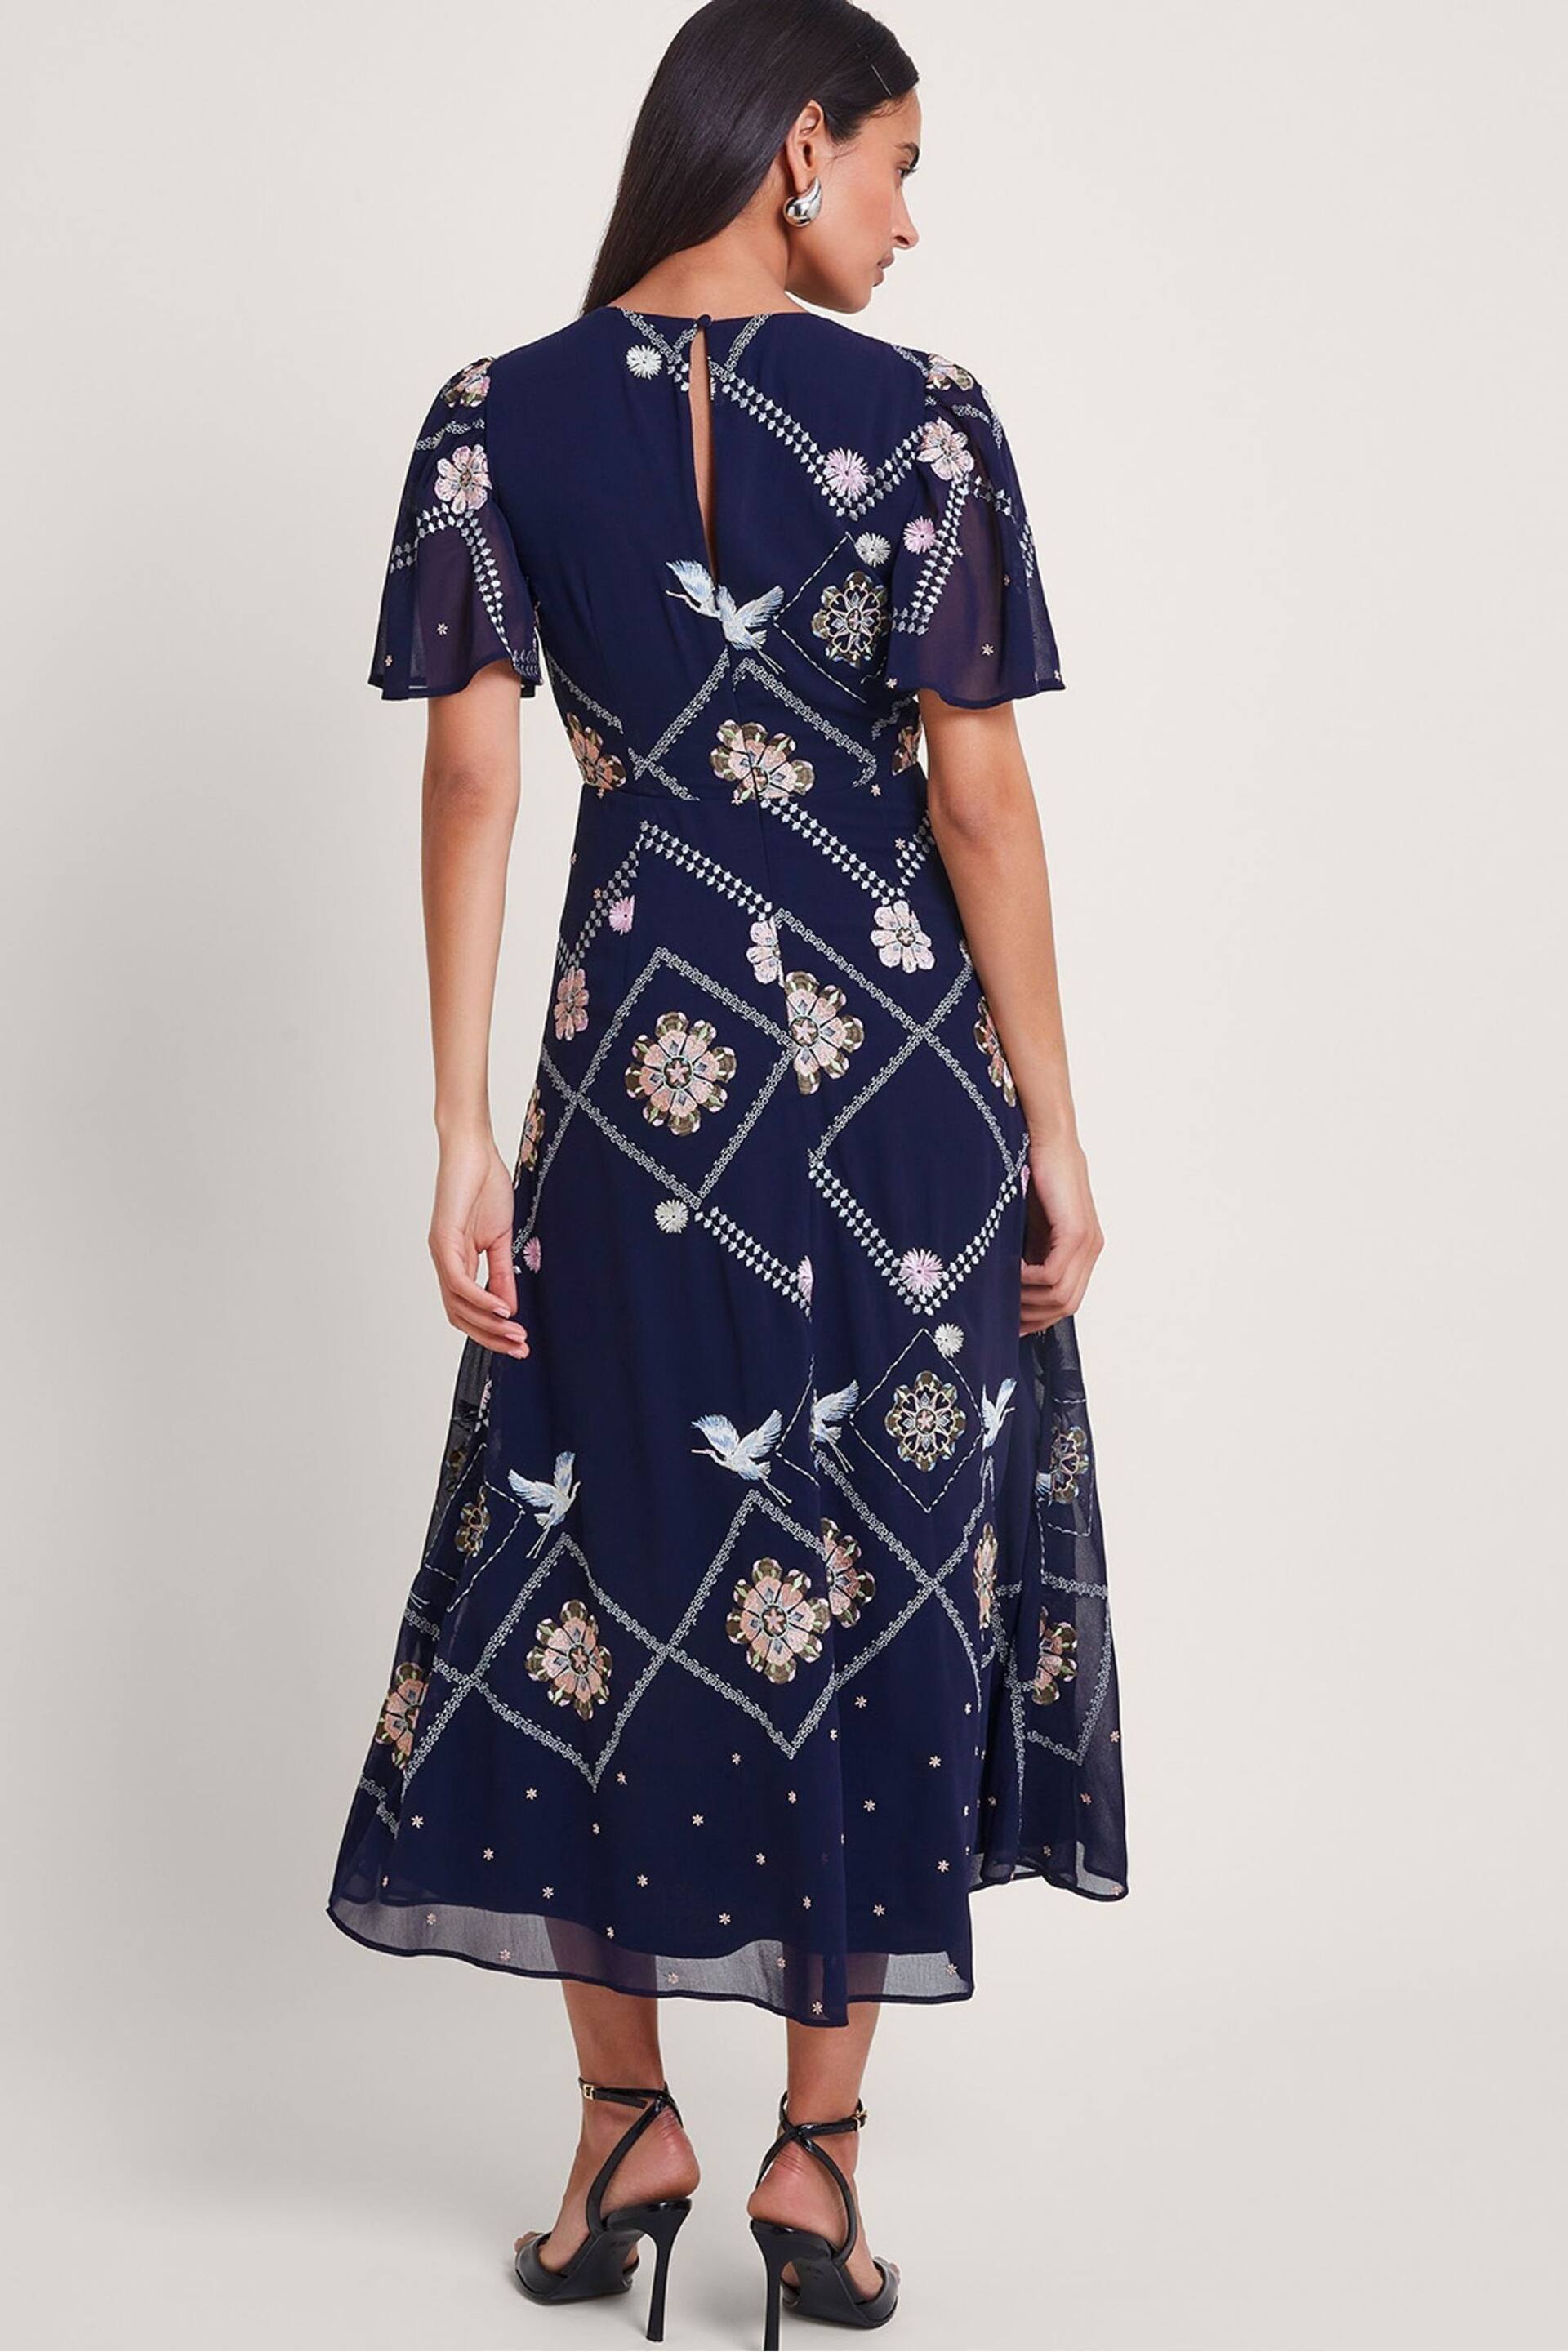 Monsoon Blue Neela Embroidered Tea Dress - Image 2 of 5